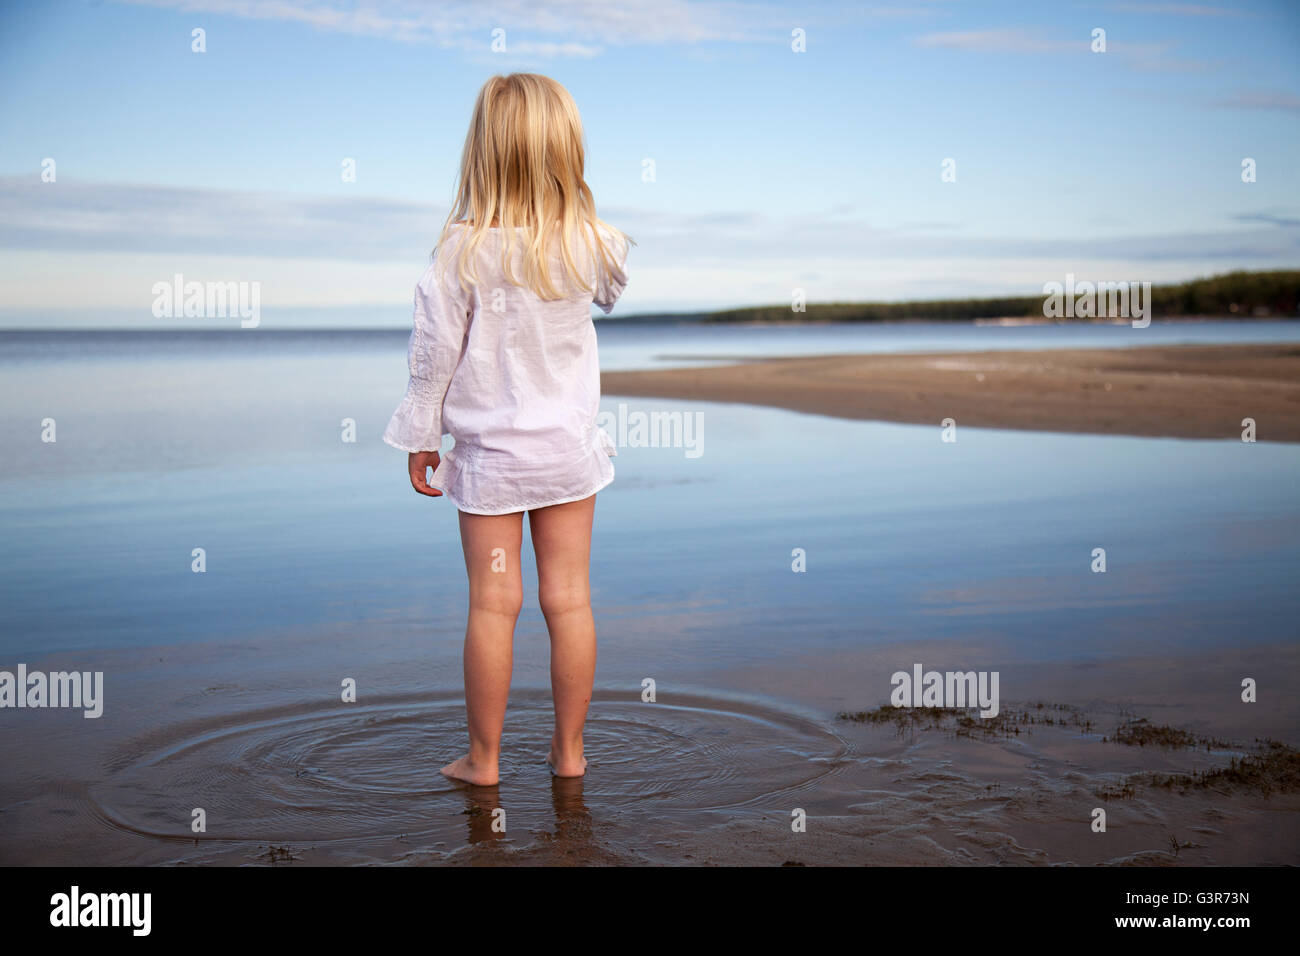 Sweden, Medelpad, Juniskarr, Blonde girl (6-7) standing in water Stock Photo